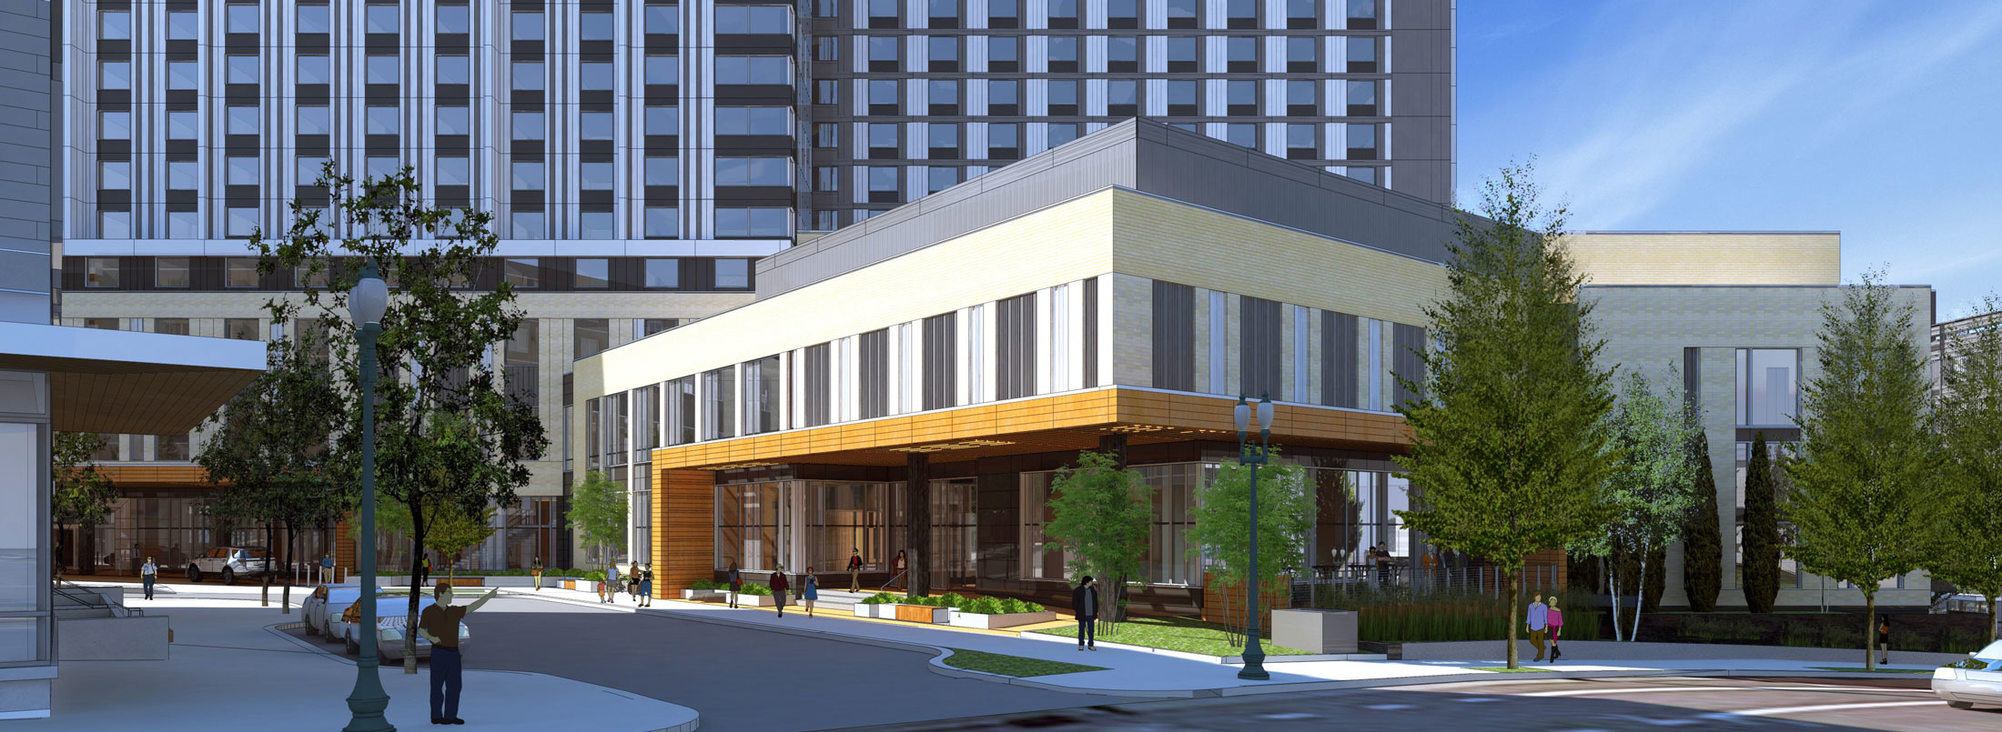 rendering of convention center hotel Multnomah entrance